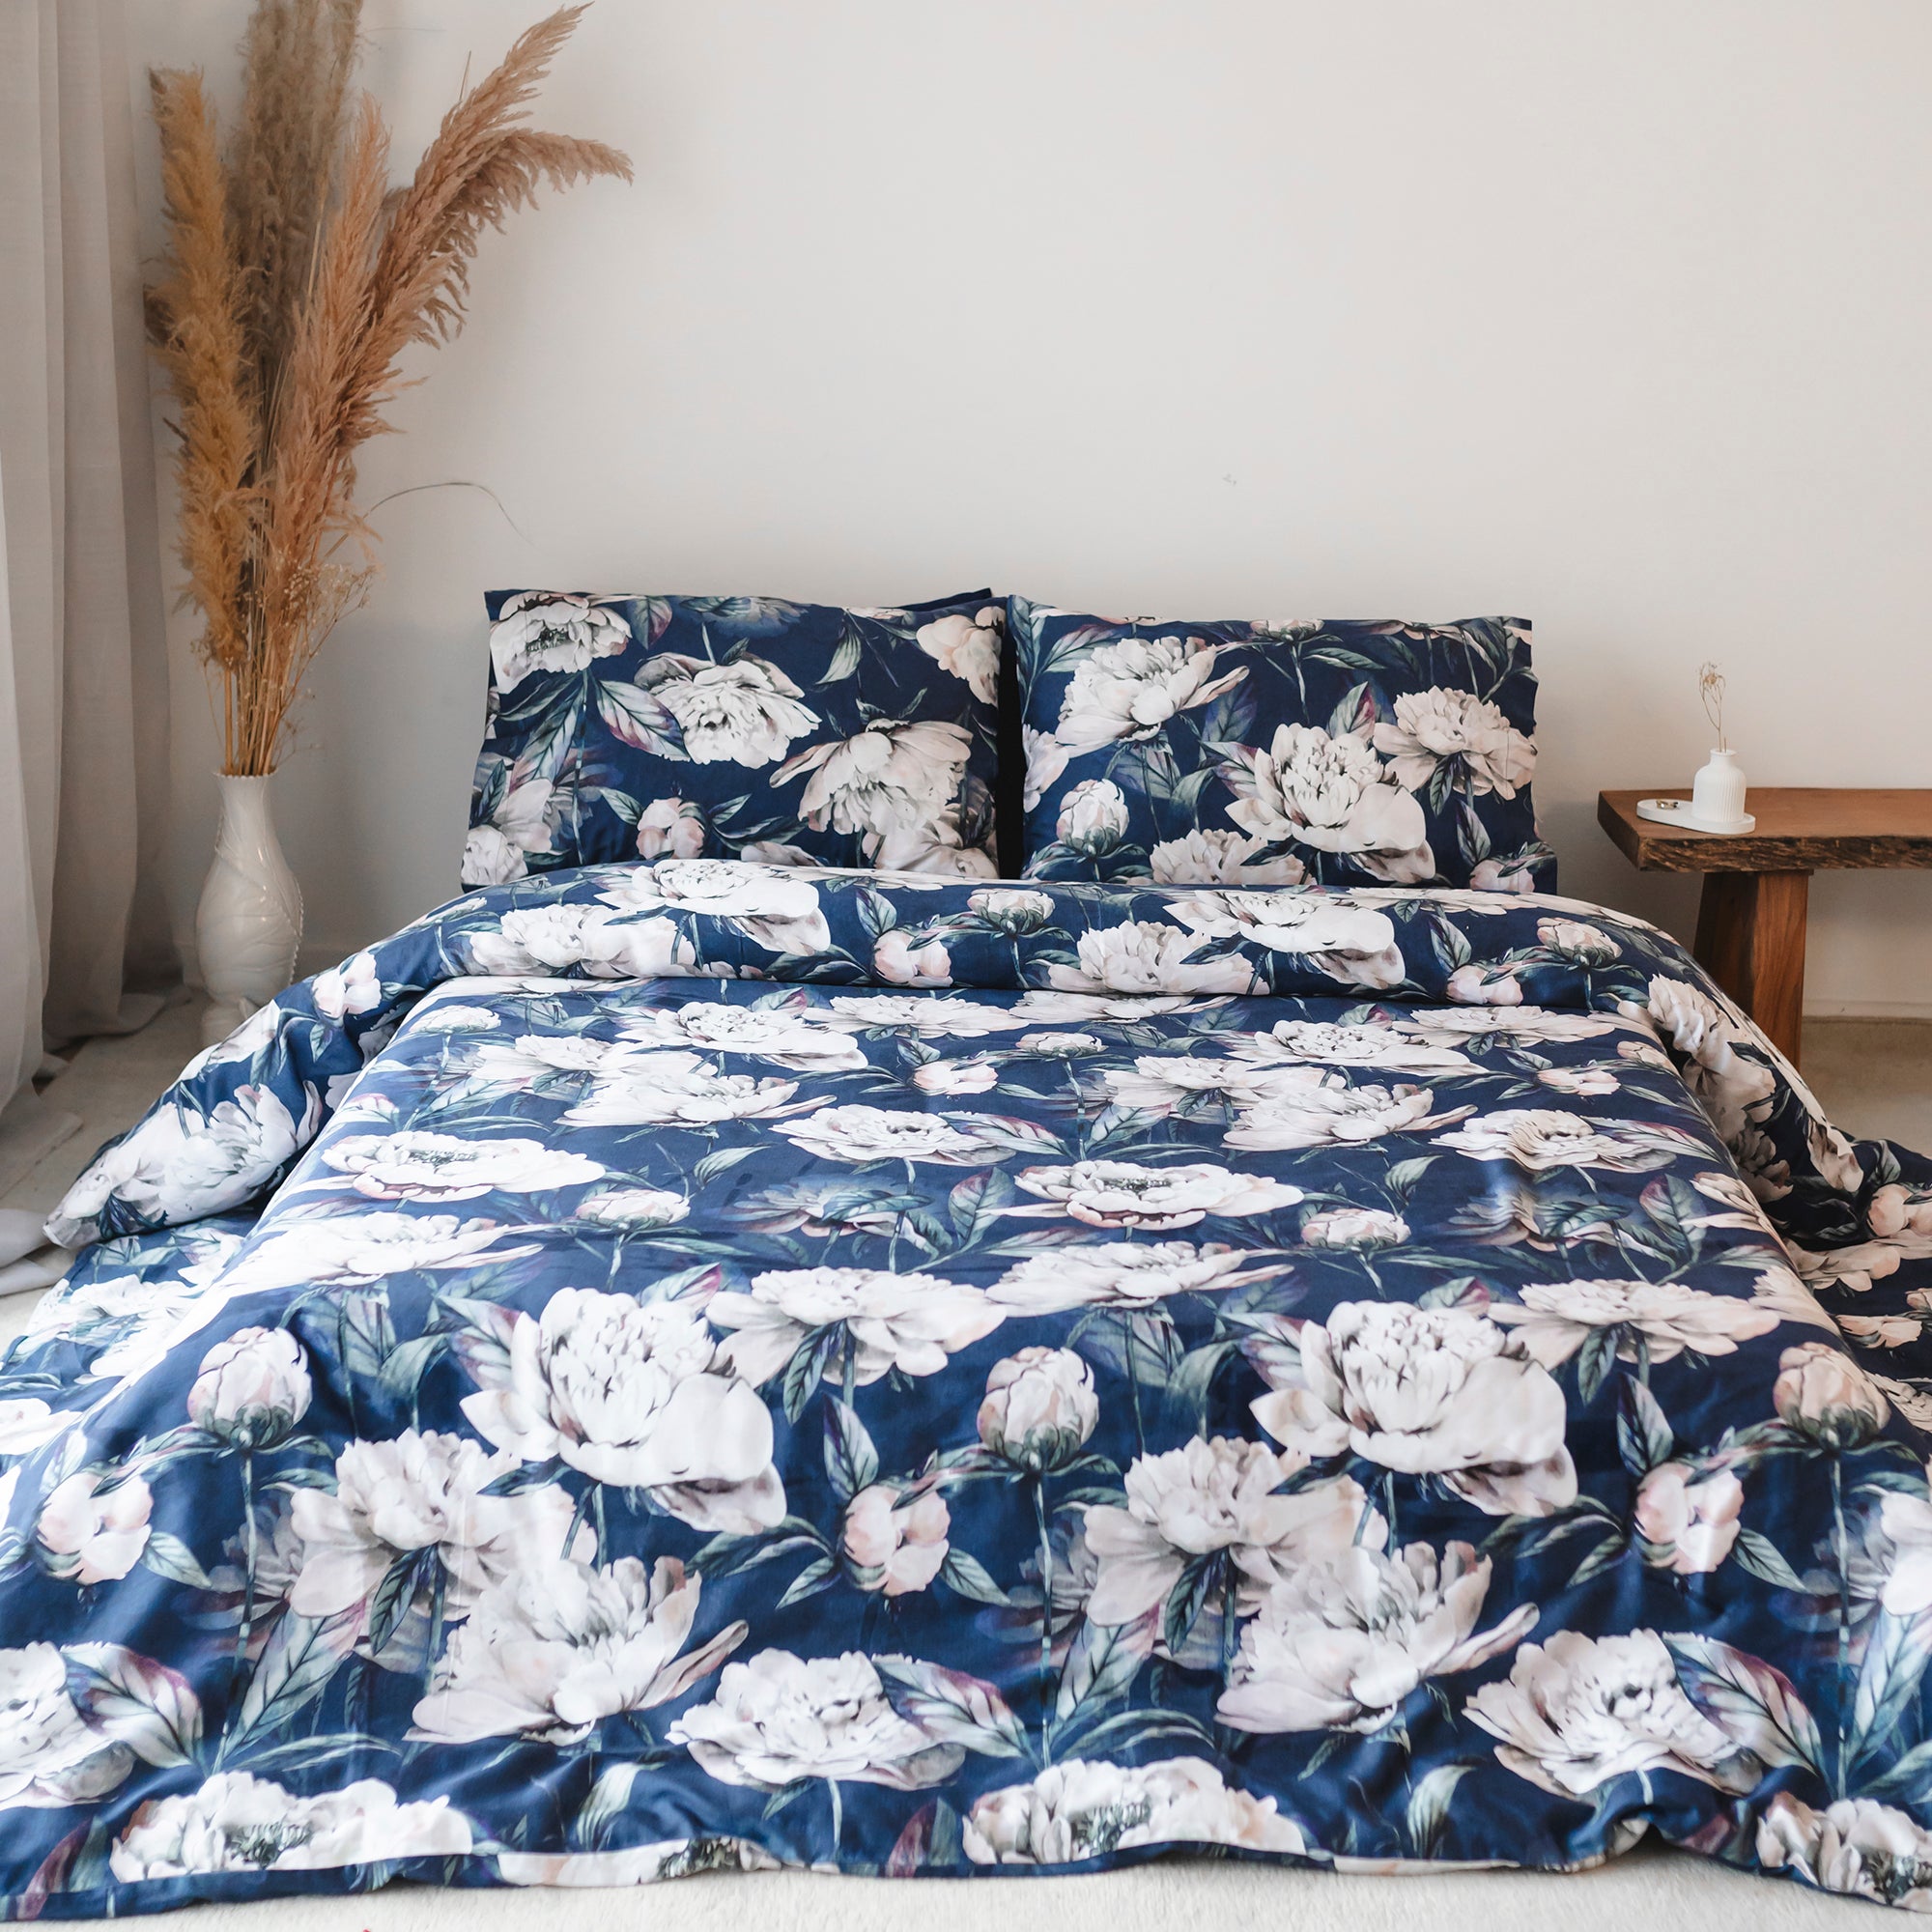 The Linen Company Bedding Night Bloom Duvet Cover Set